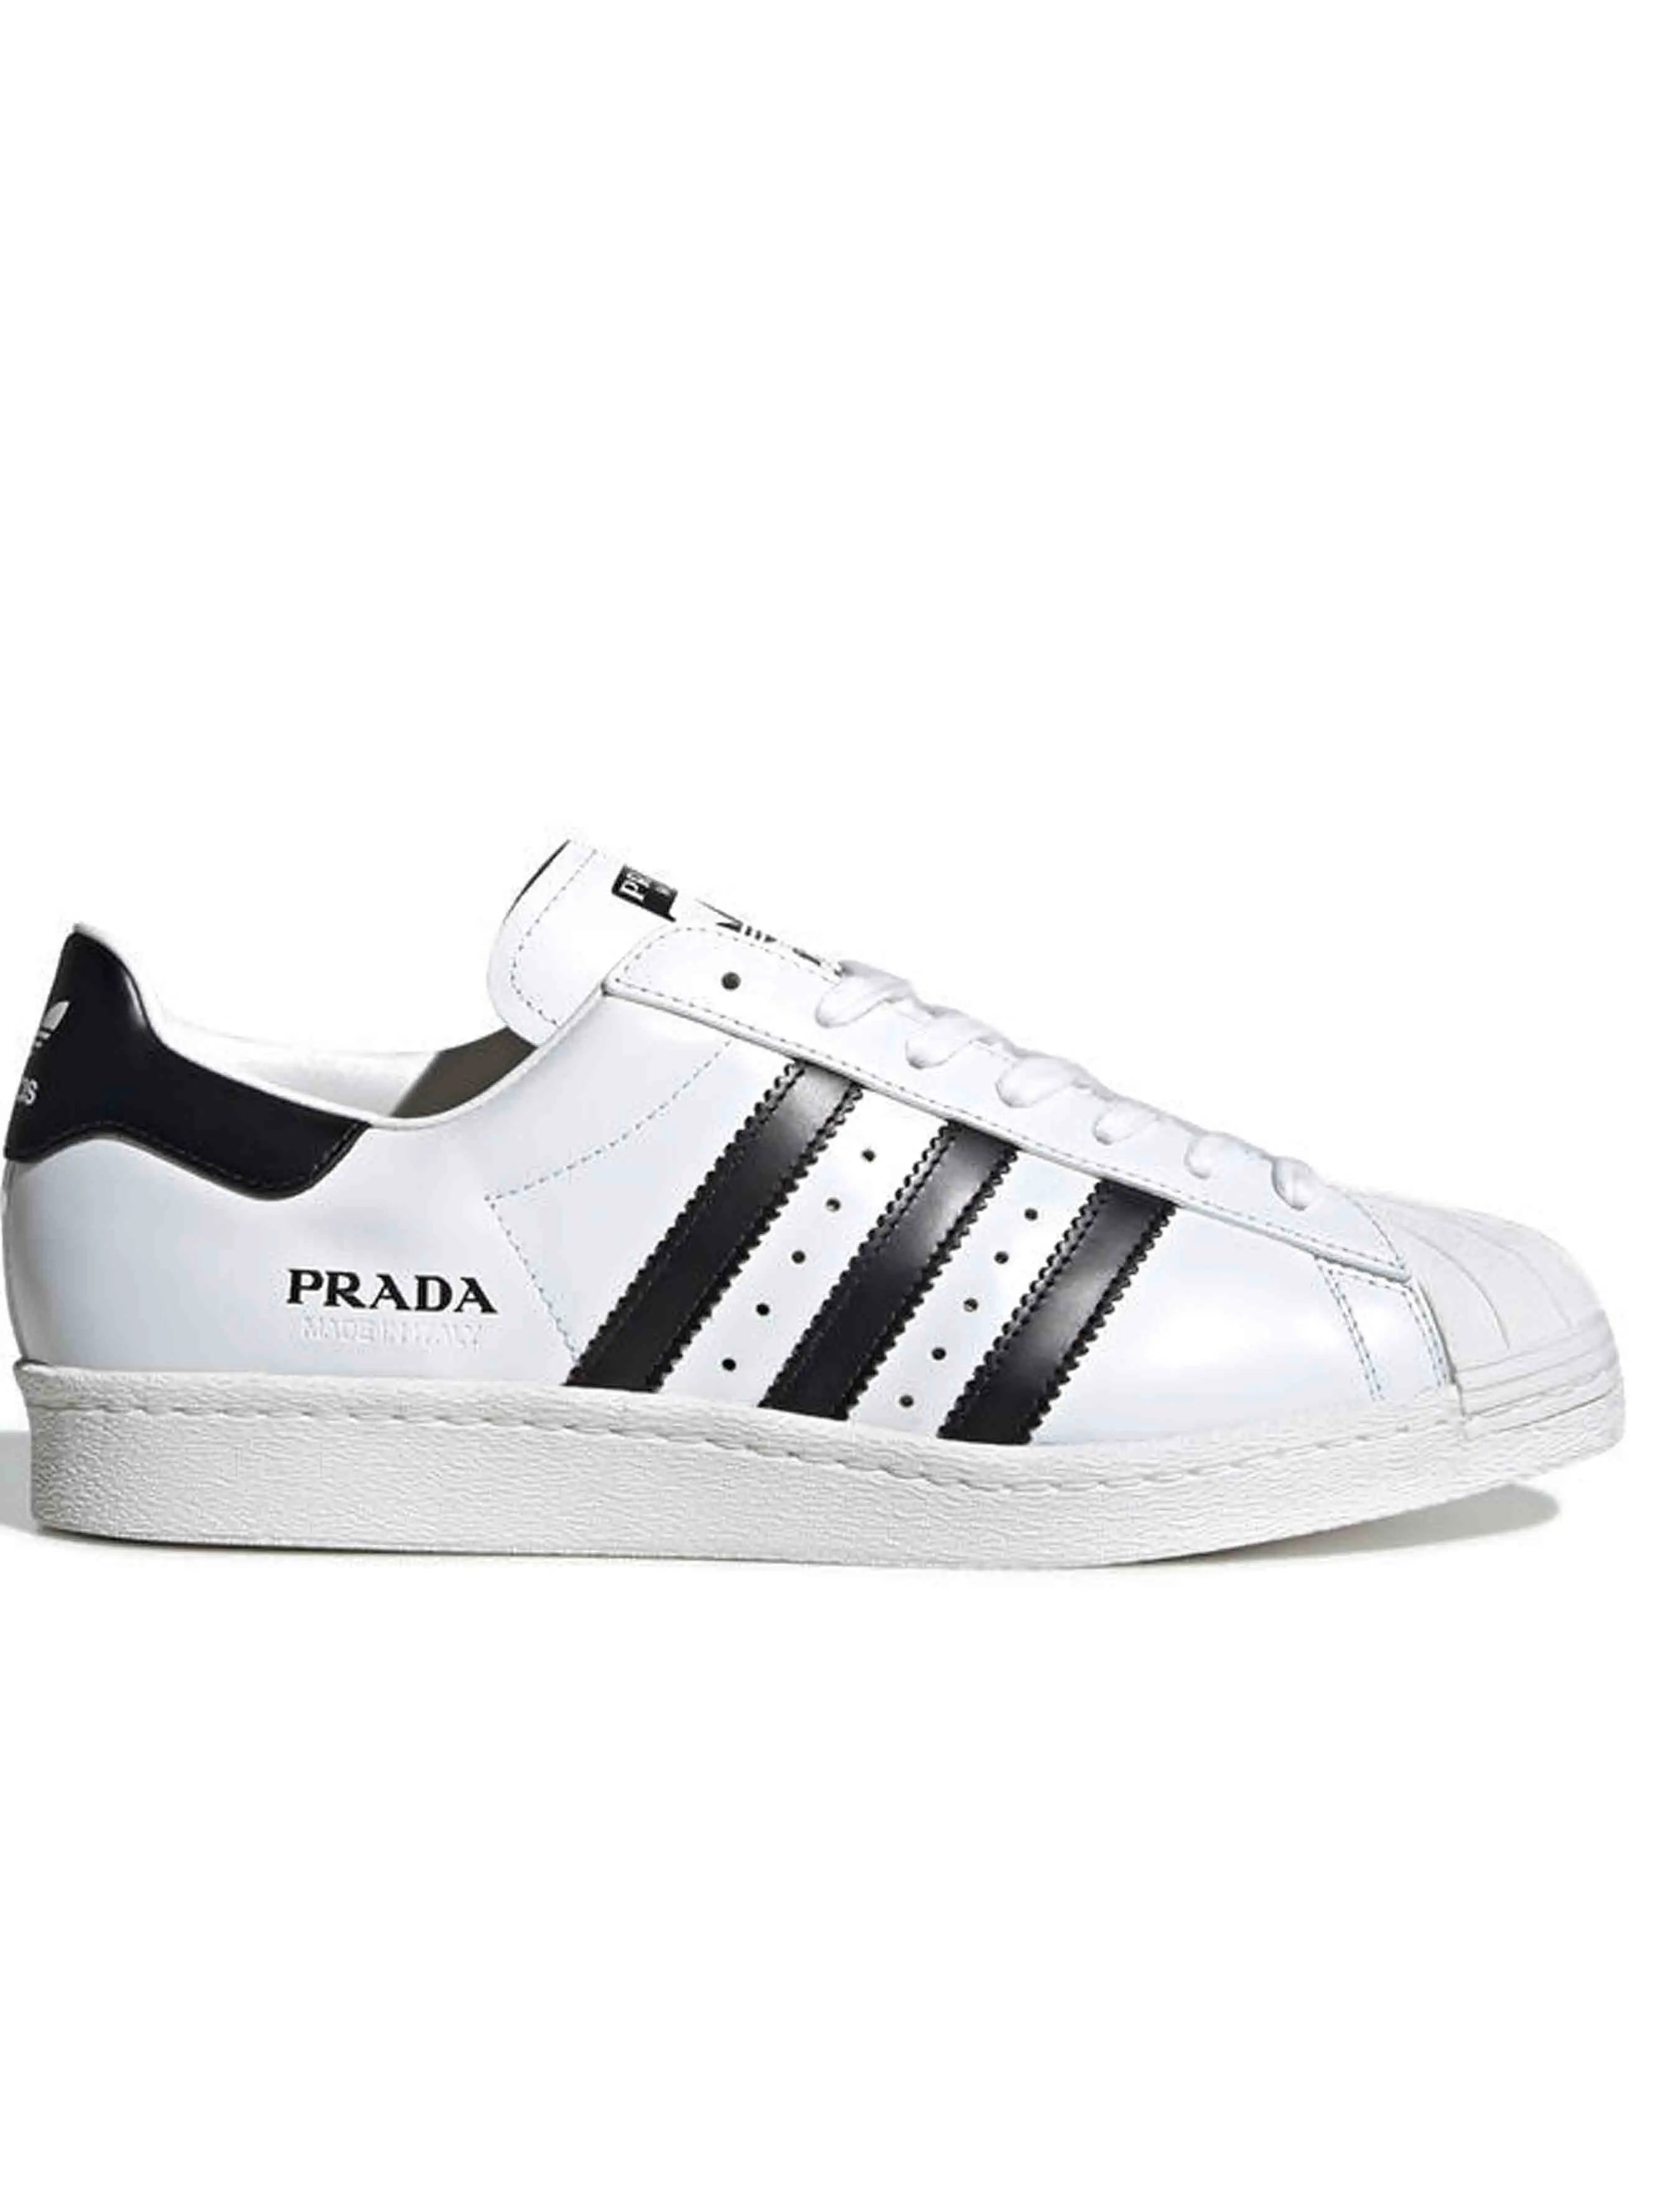 adidas Superstar Prada White Black - Prior